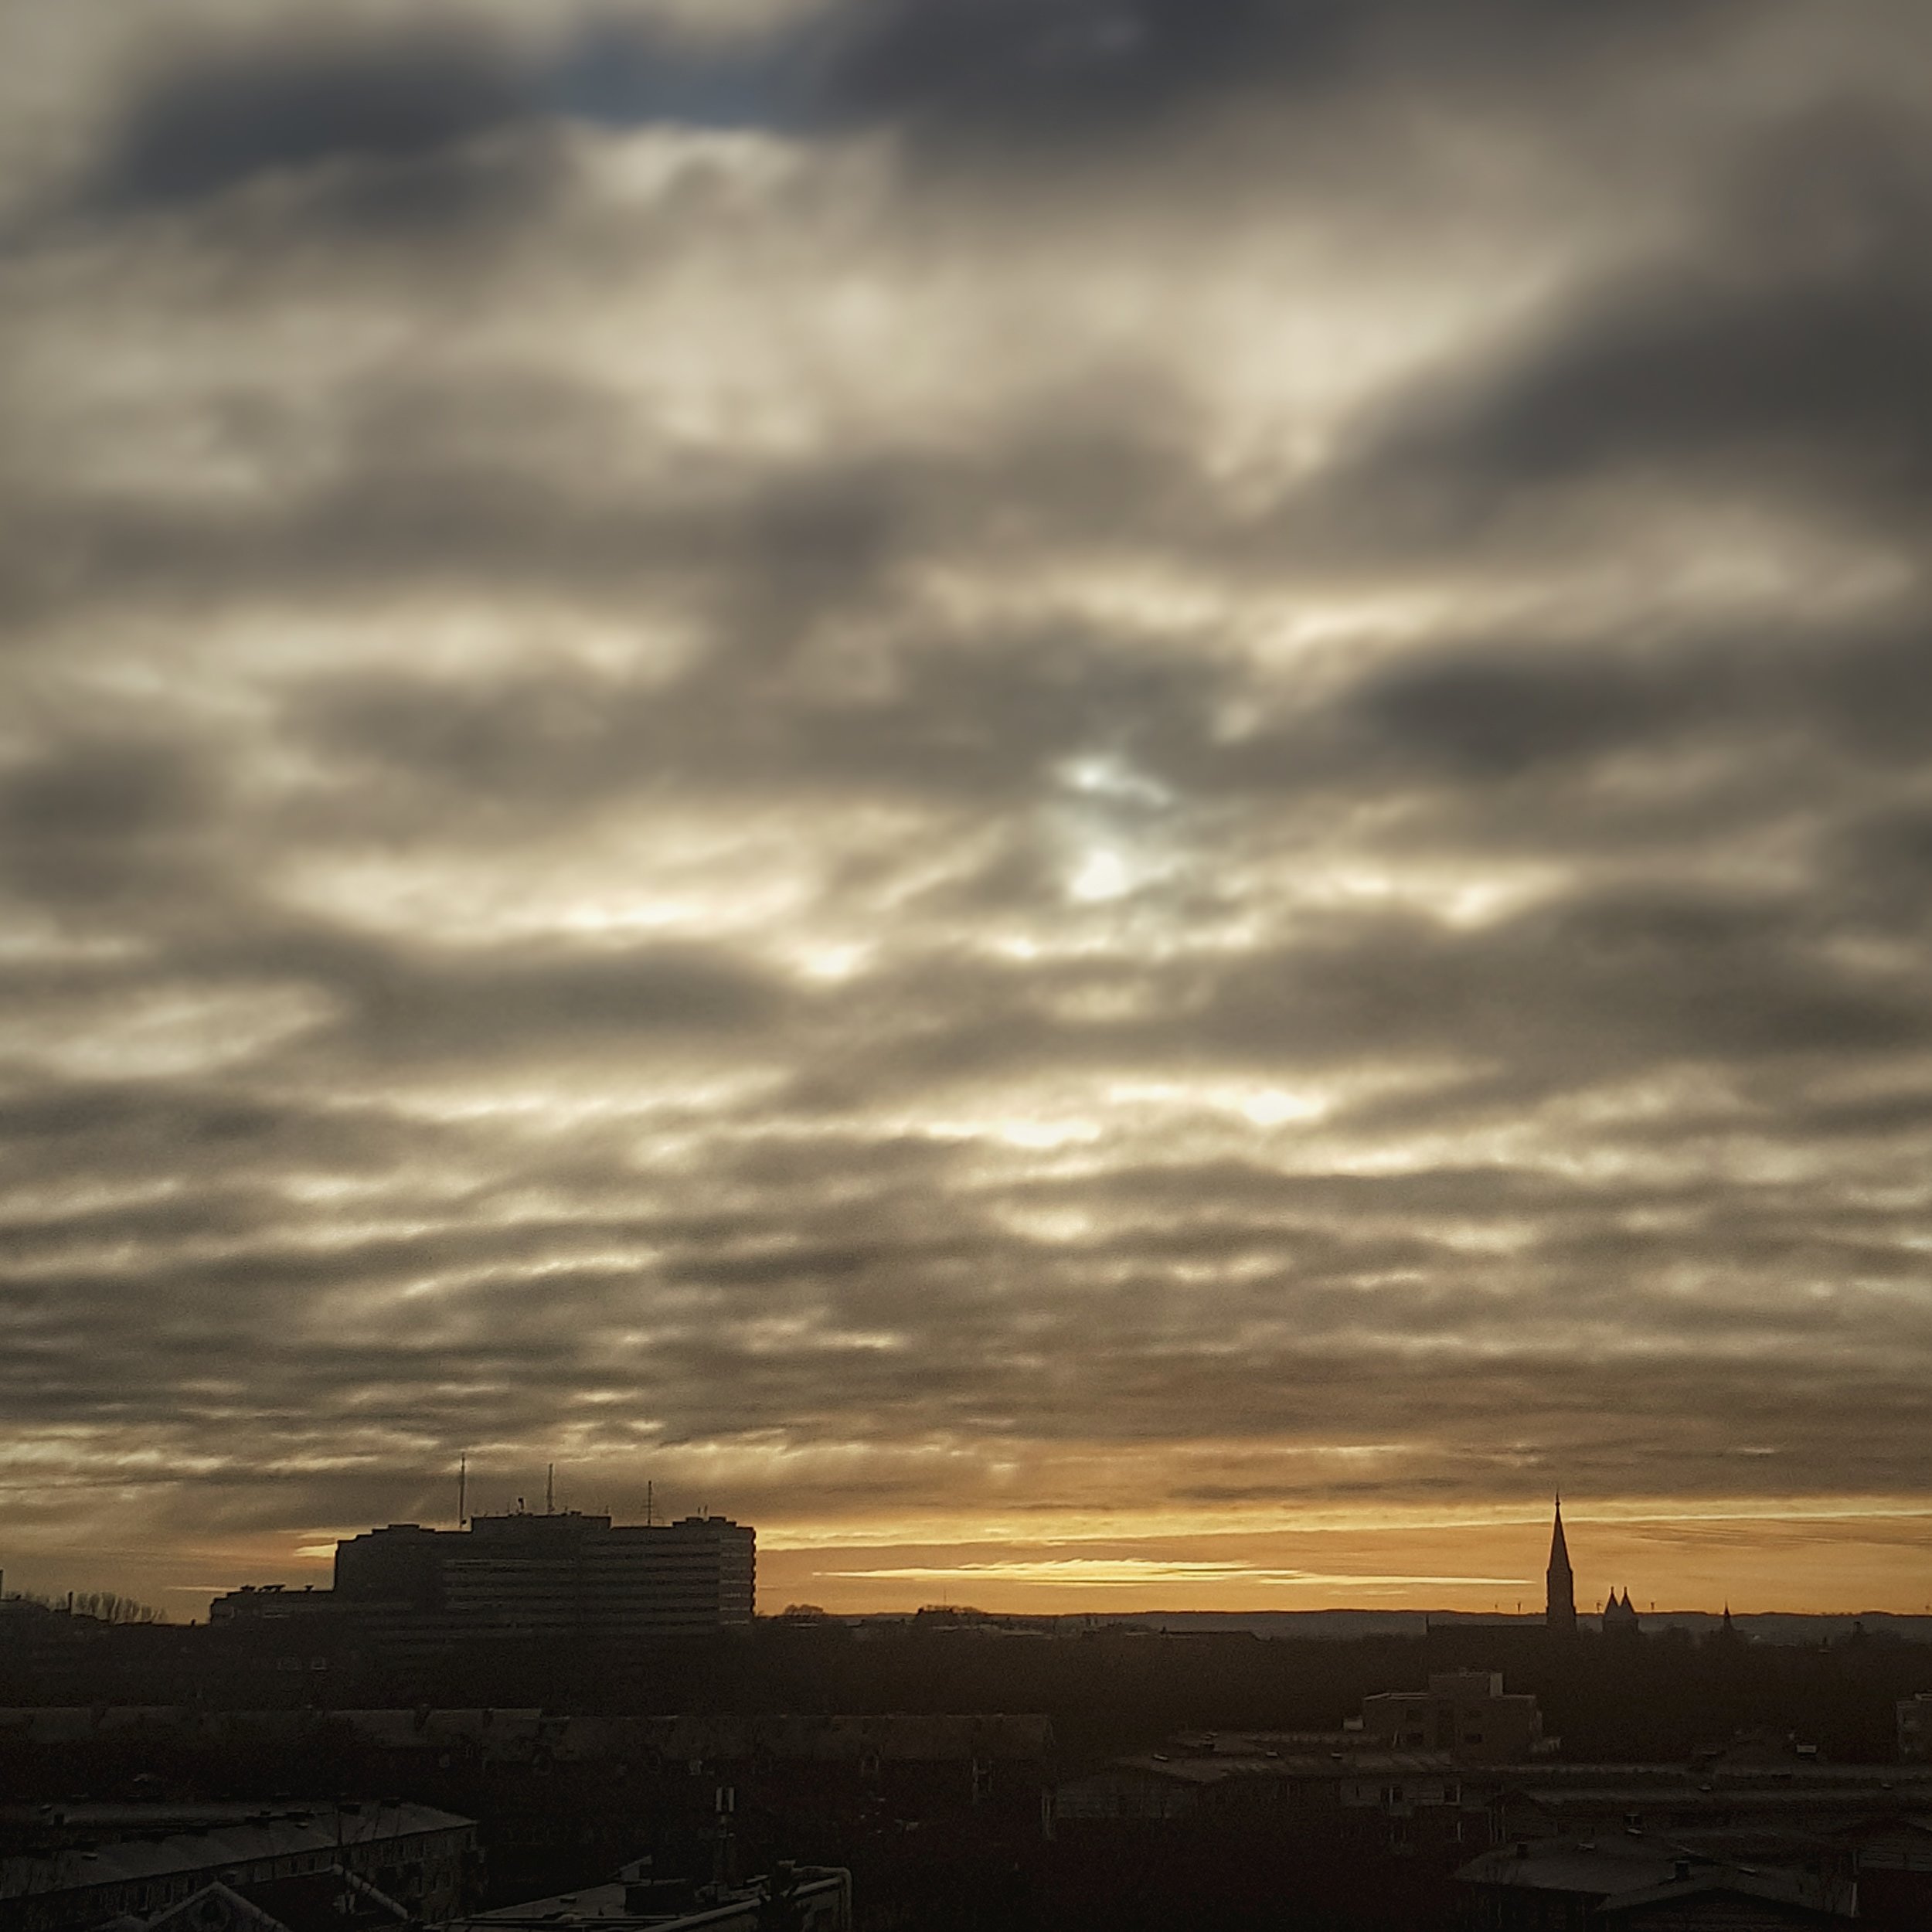 Day 6 - January 6:  Sky above Lund